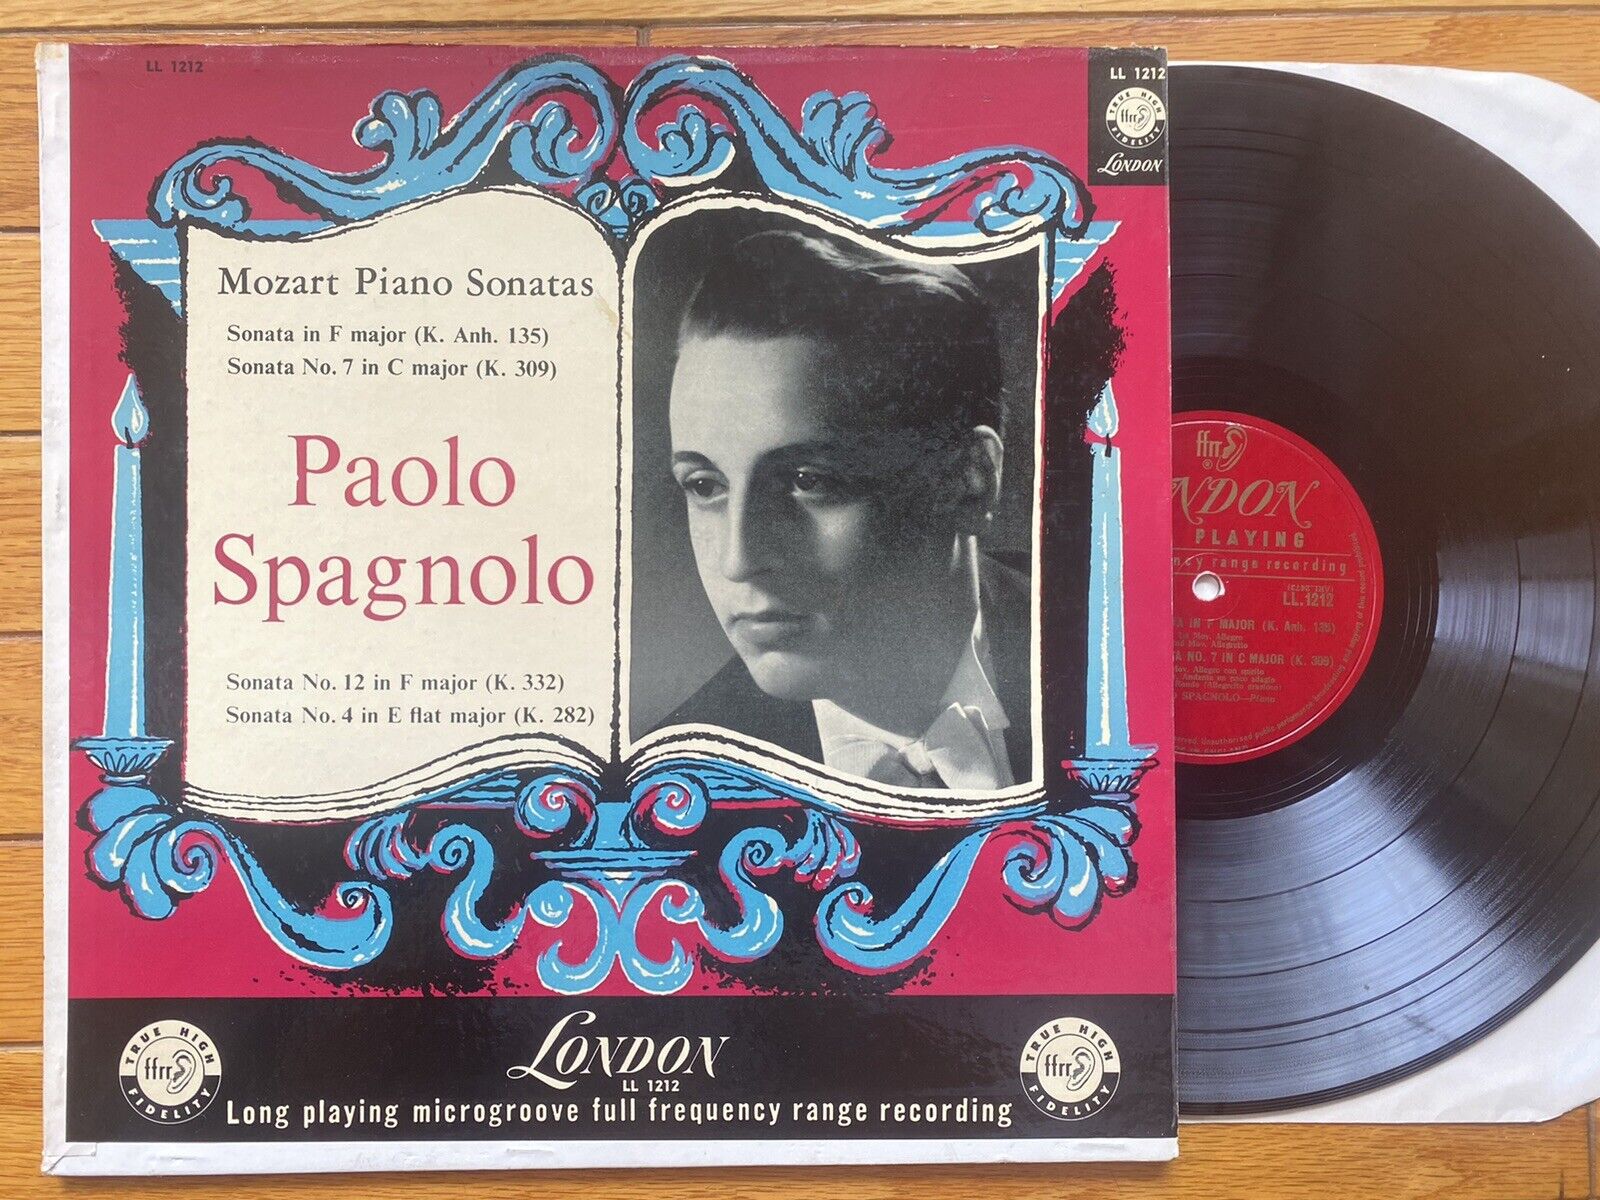 Mozart: Piano Sonatas - Paolo Spagnolo London LL 1212 - Mono - 1956 VG+